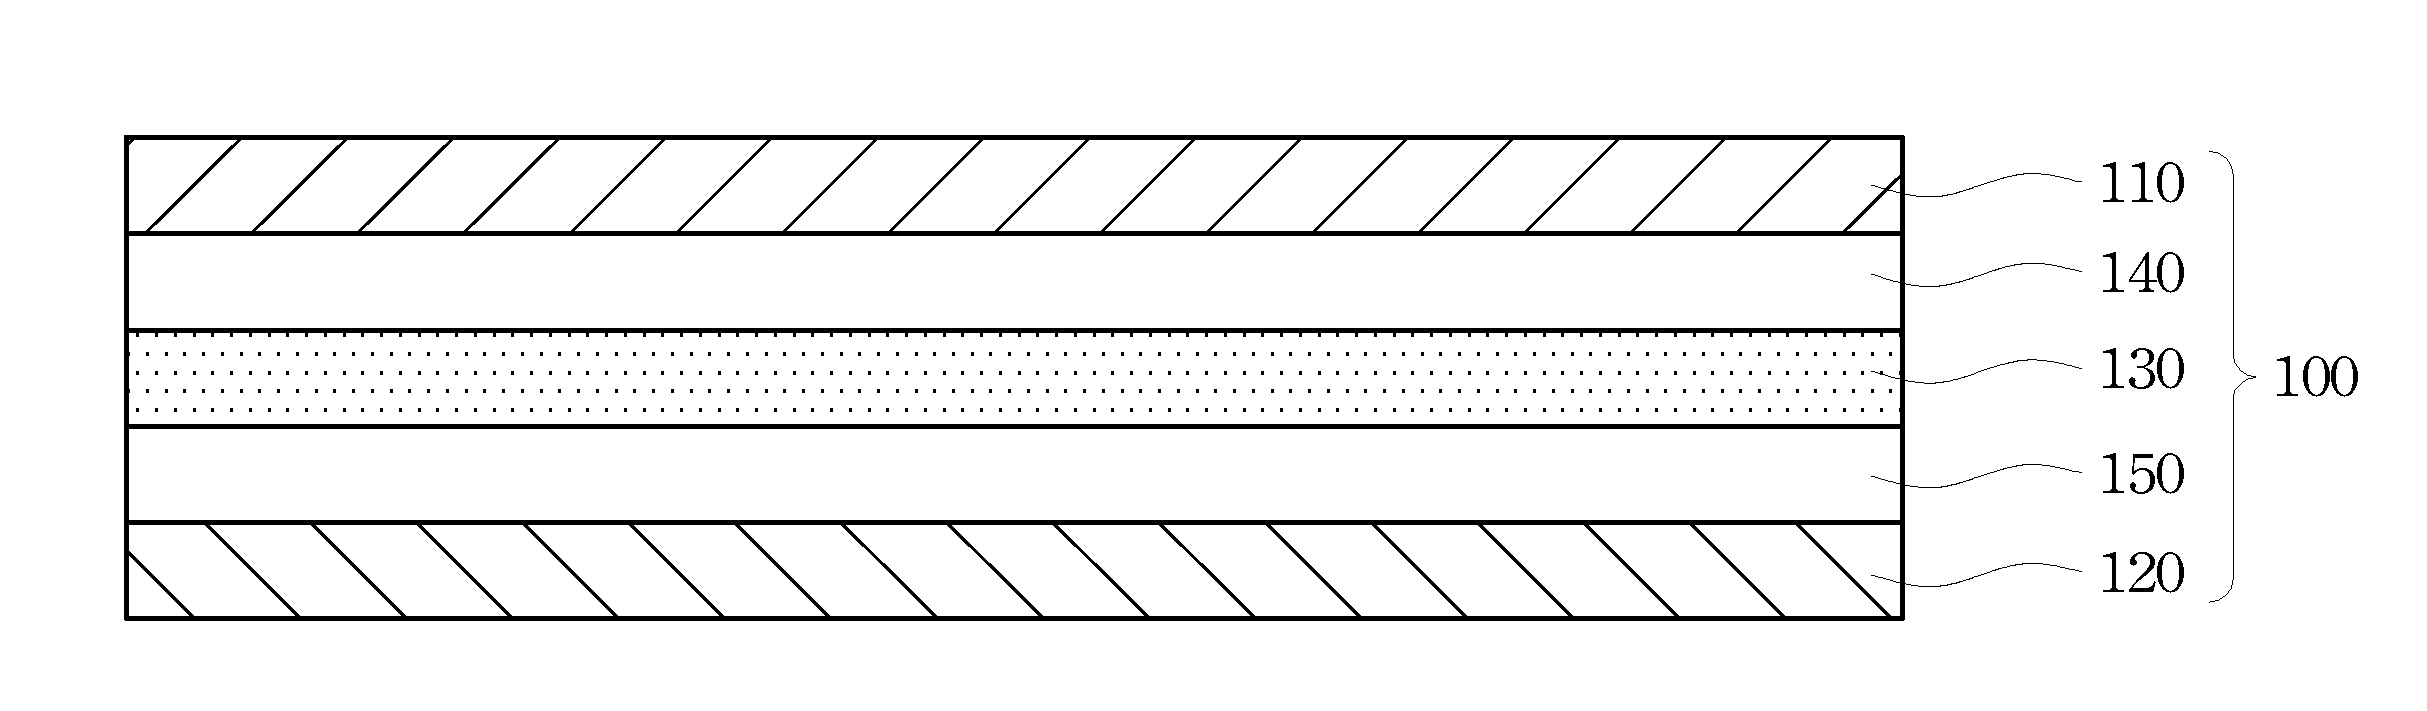 Backsheet for a solar module